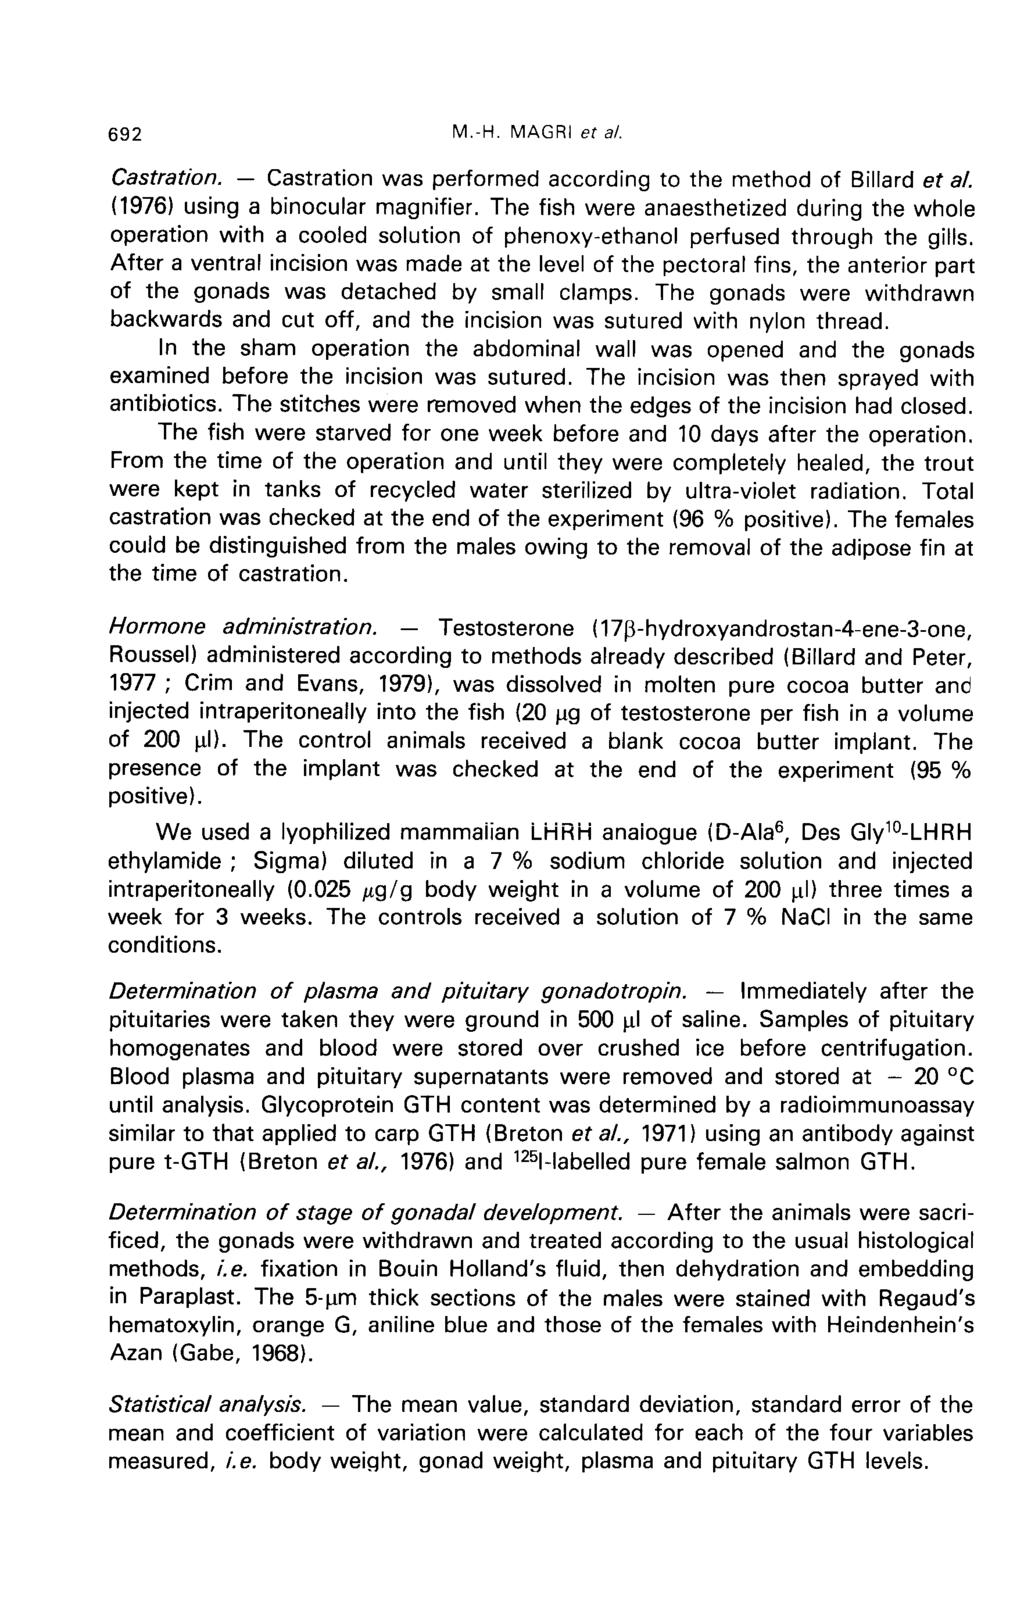 Castration. &horbar; Castration was performed according to the method of Billard et al. (1976) using a binocular magnifier.